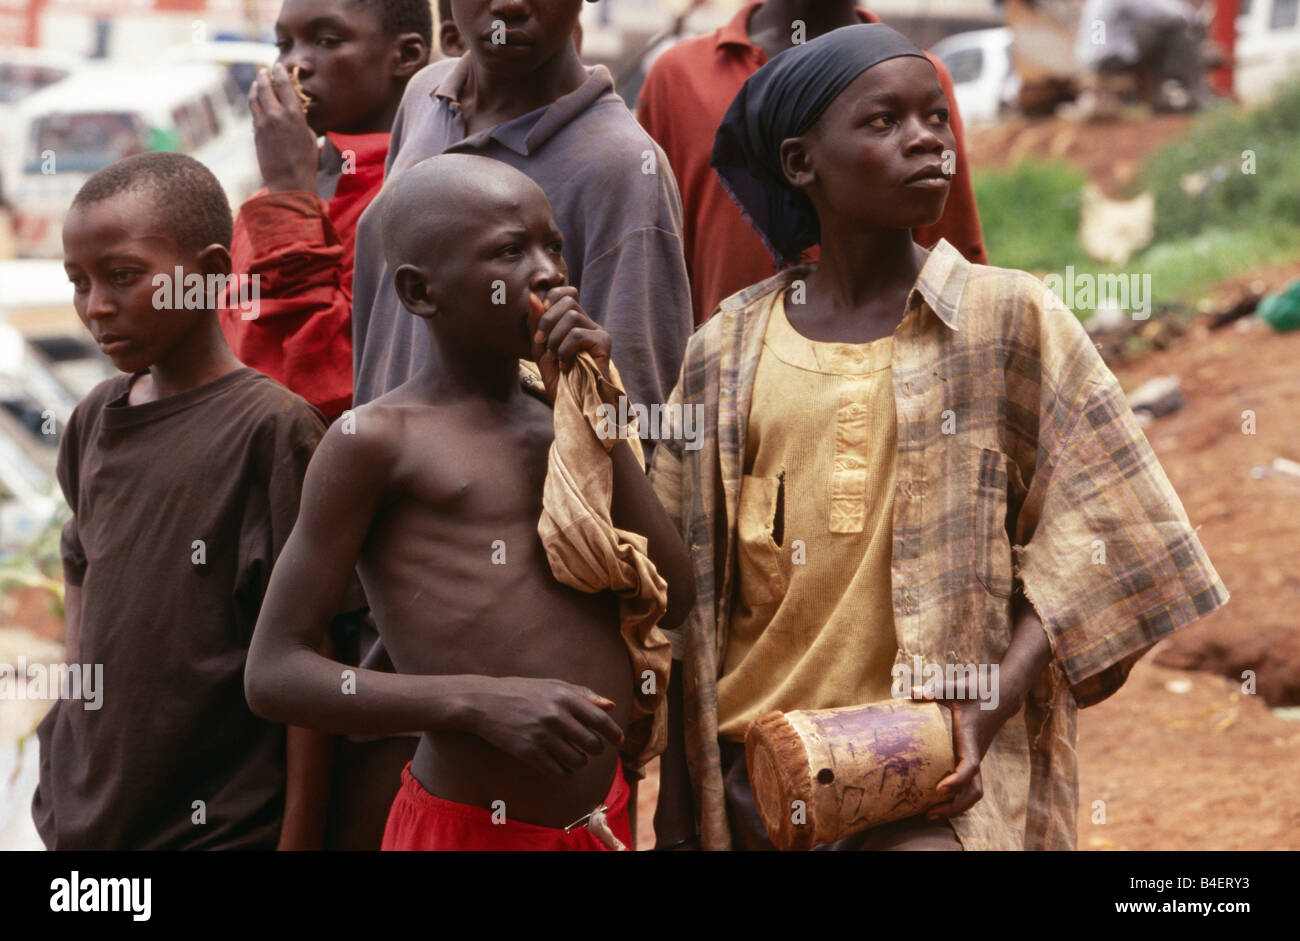 Group of homeless boys glue sniffing in Kampala, Uganda, Africa Stock Photo